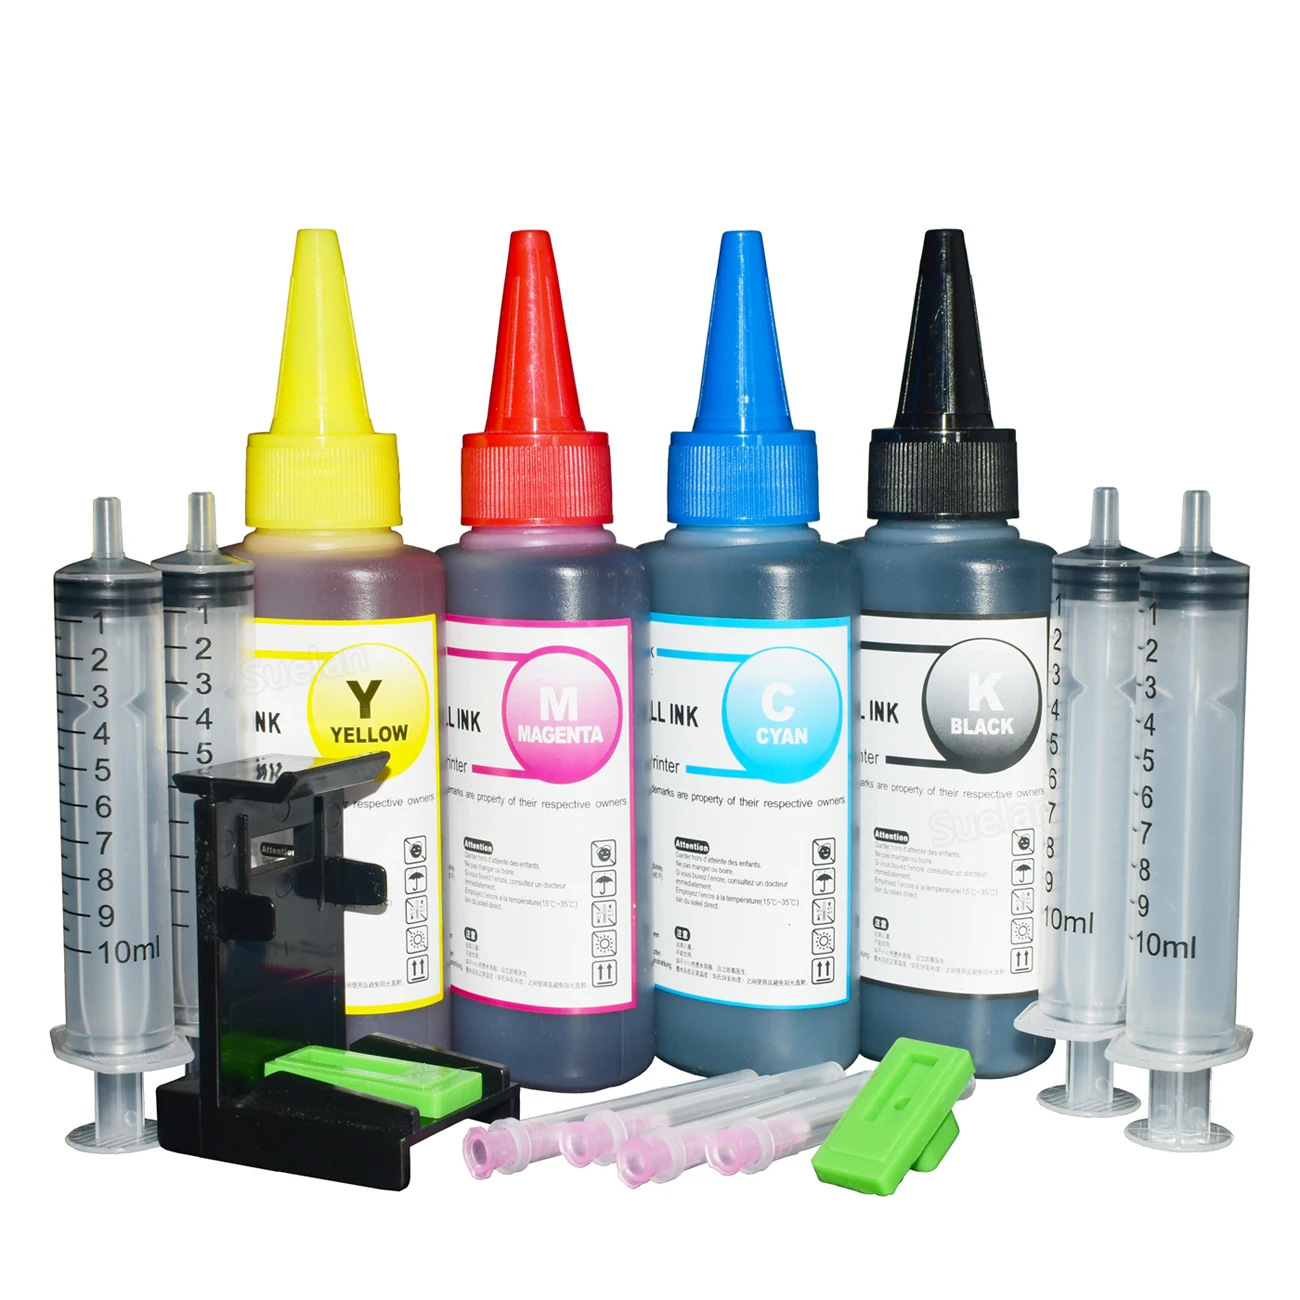 Printer Ink for Hp 305 Ink Cartridge For Hp DeskJet 2300 2700 4100 HP ENVY 6000 6400 Hp 305 xl Ink Cartridge Refill Ink Kit100ml